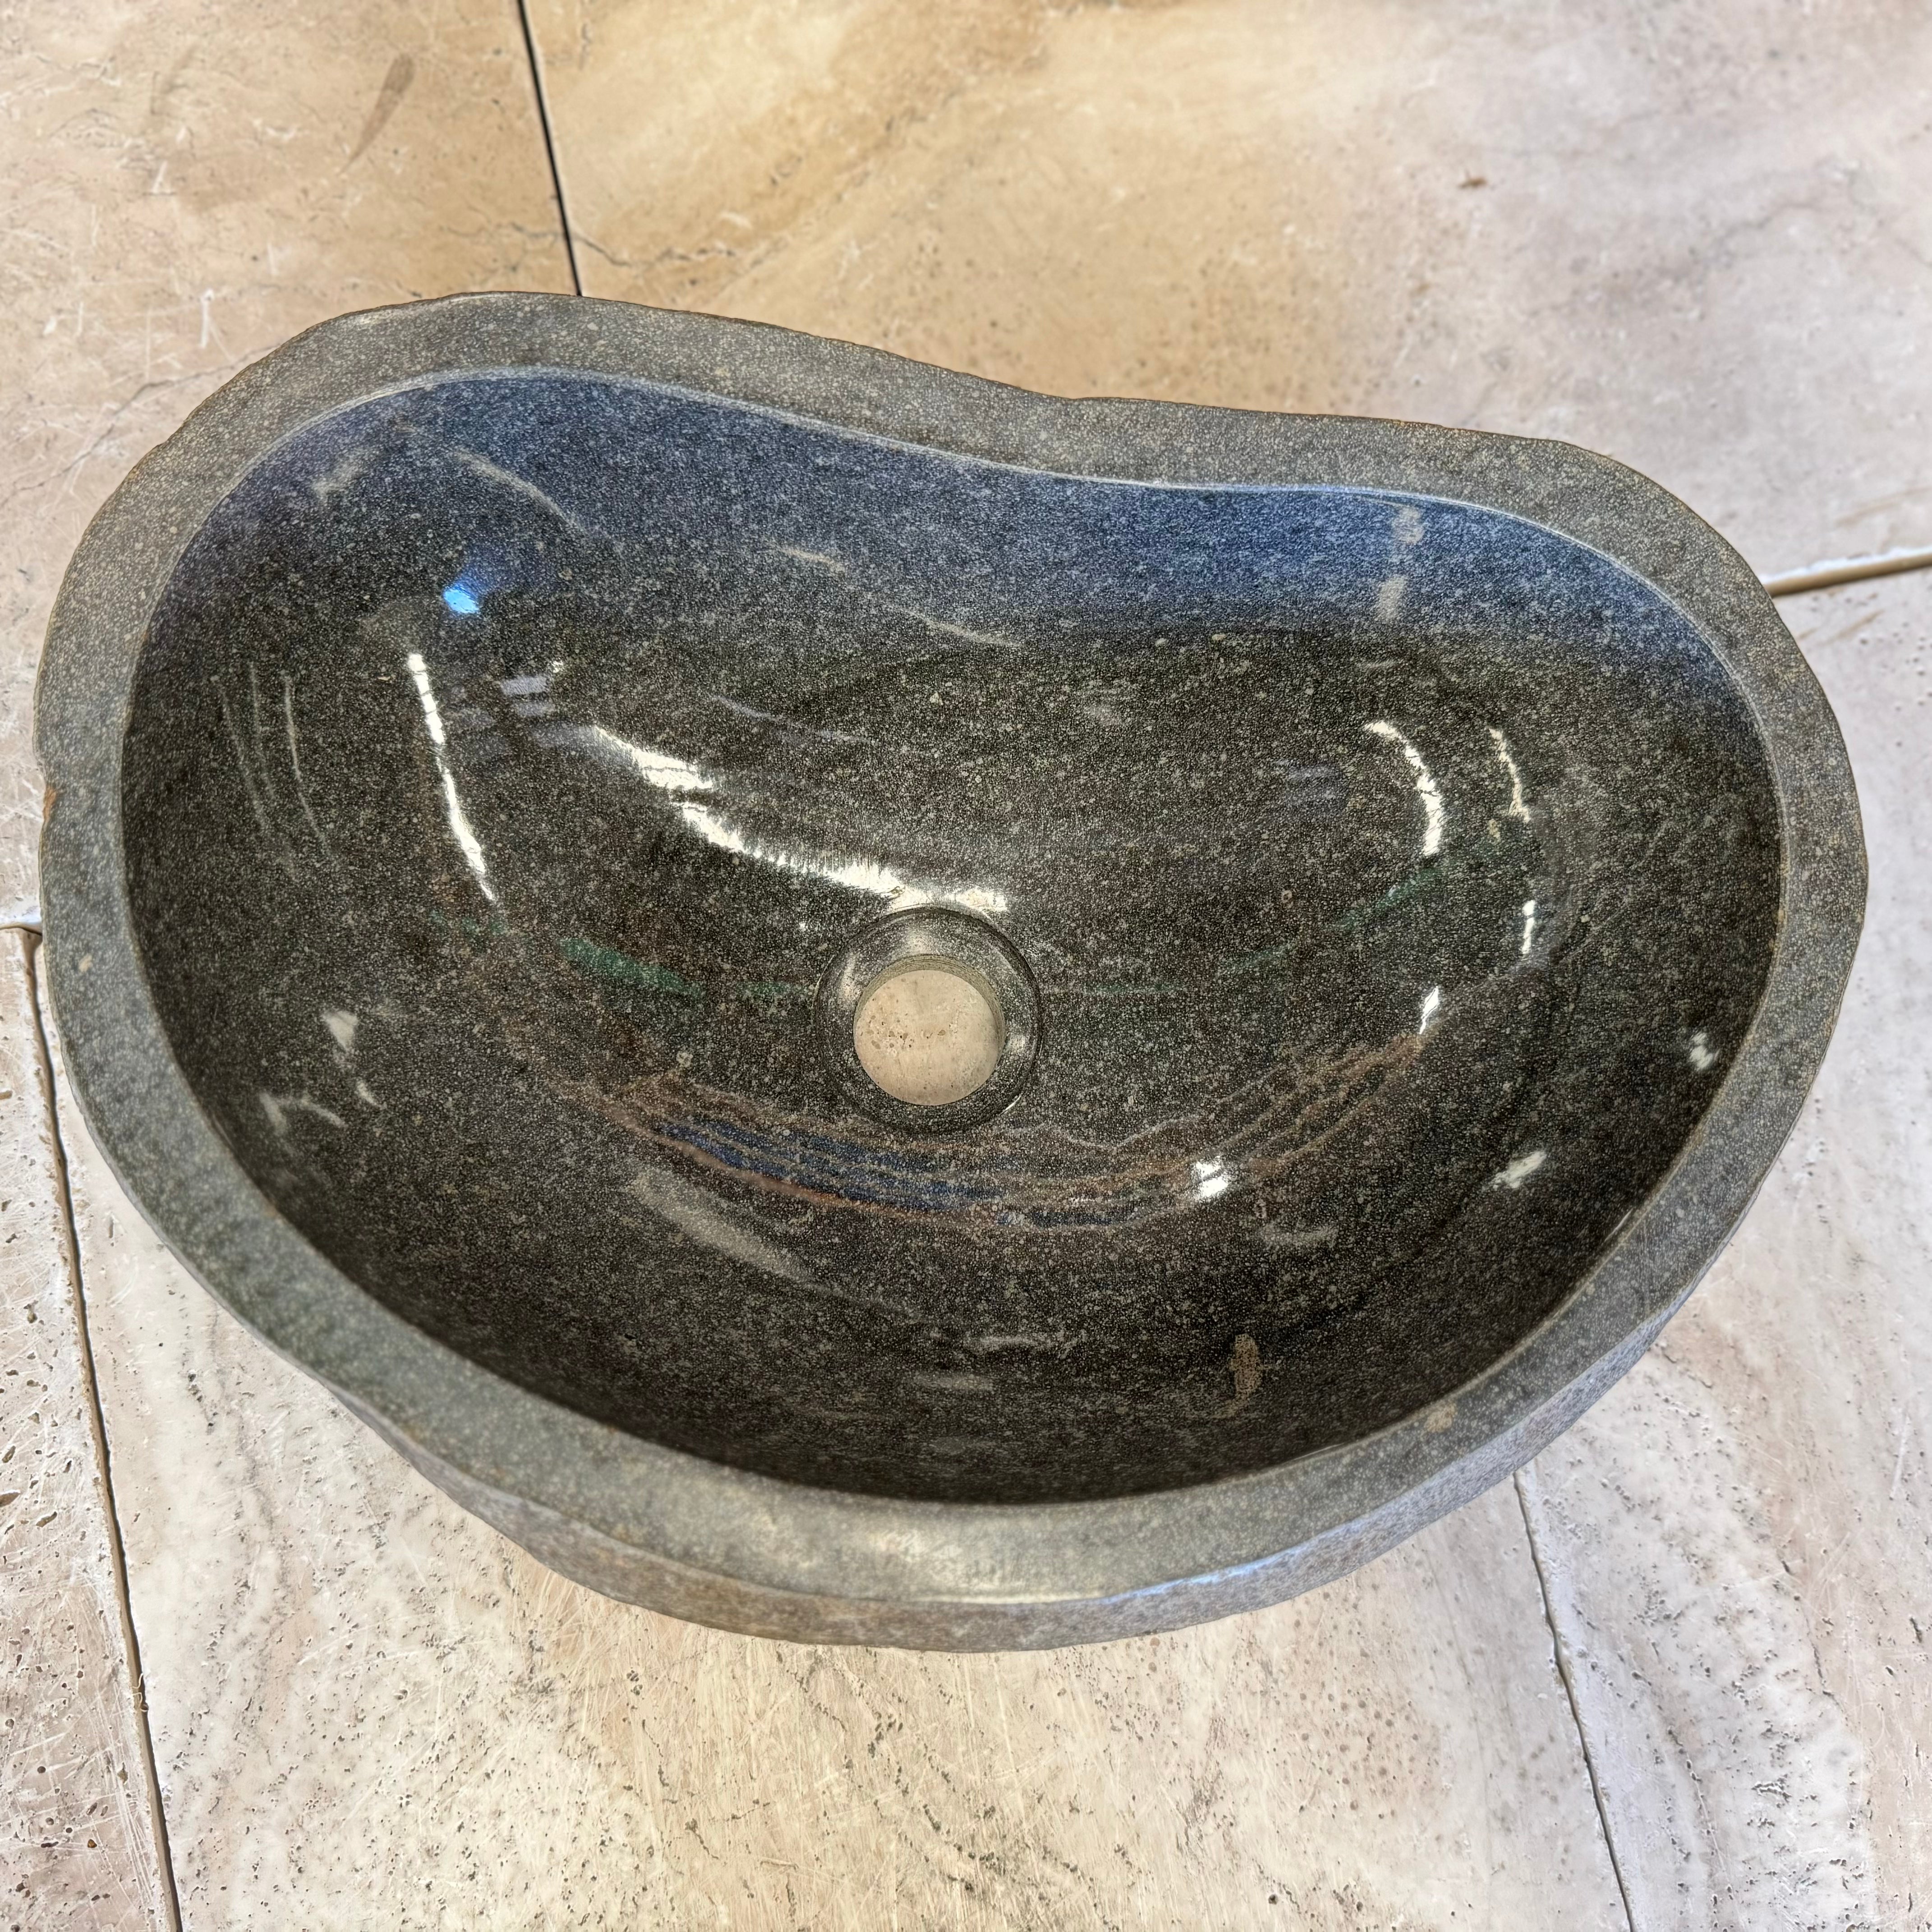 Handmade Natural Oval River Stone Bathroom Basin - RM2306104